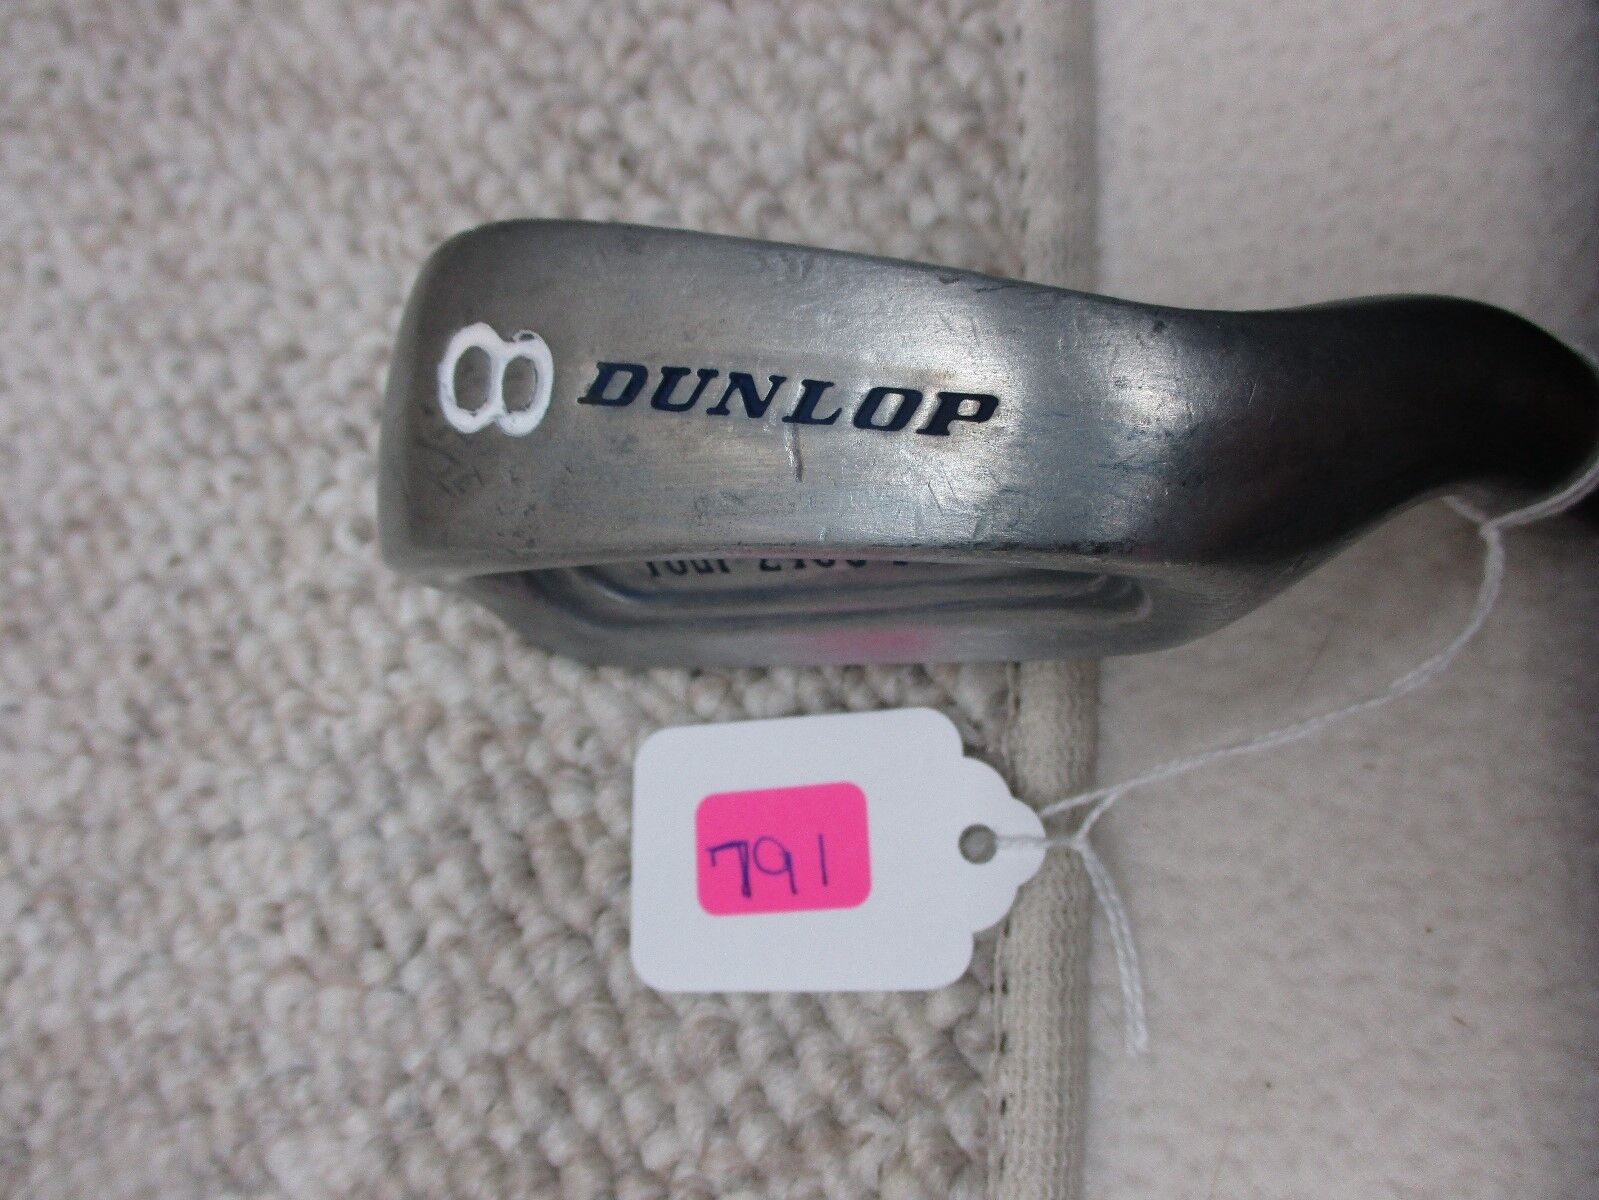 //Dunlop Tour 2400 Plus #8 Iron - Right Hand - Women\'s - Steel Shaft - #791